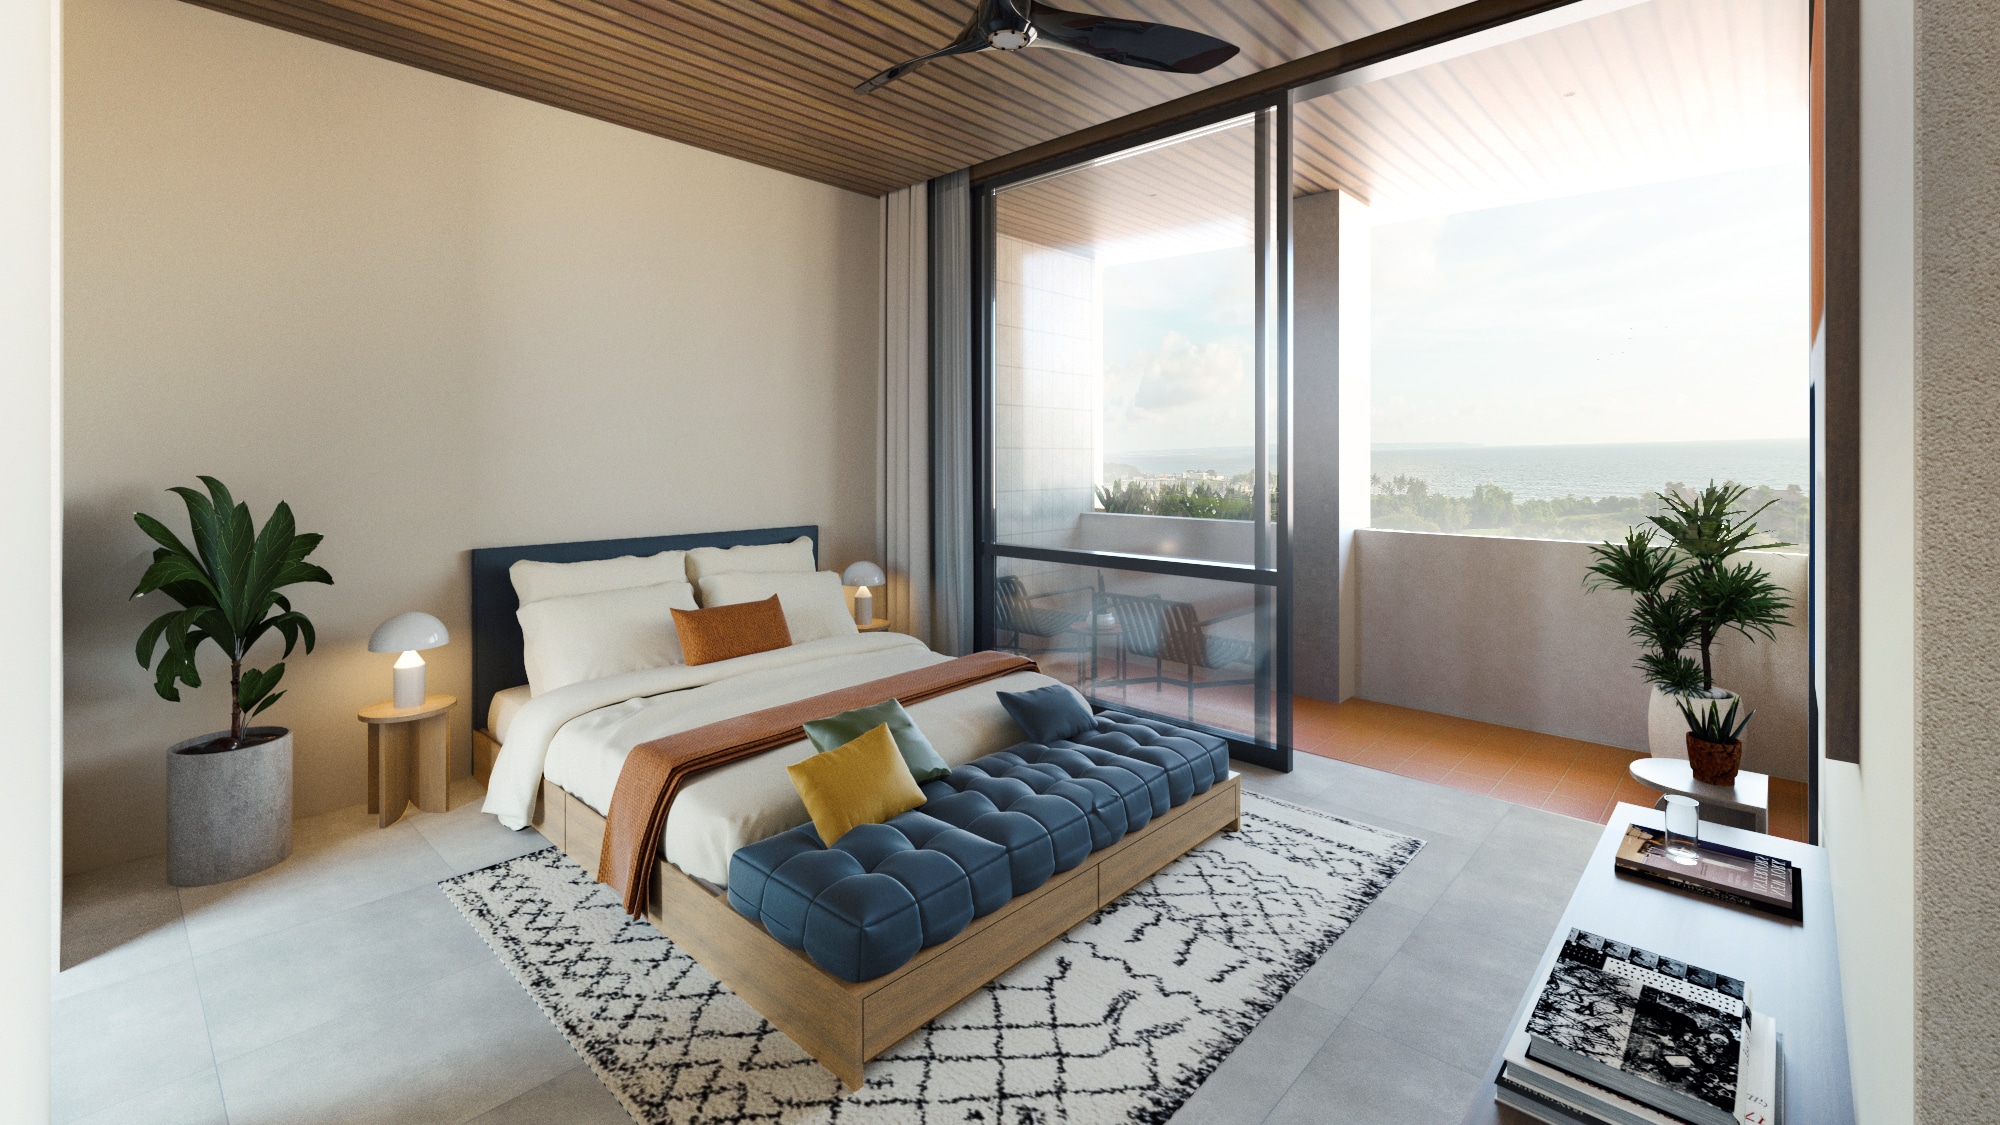 Design Assembly - Pantai Lima Heights - Bali Architect - Interior Design - Bali Villa - Penthouse Bedroom